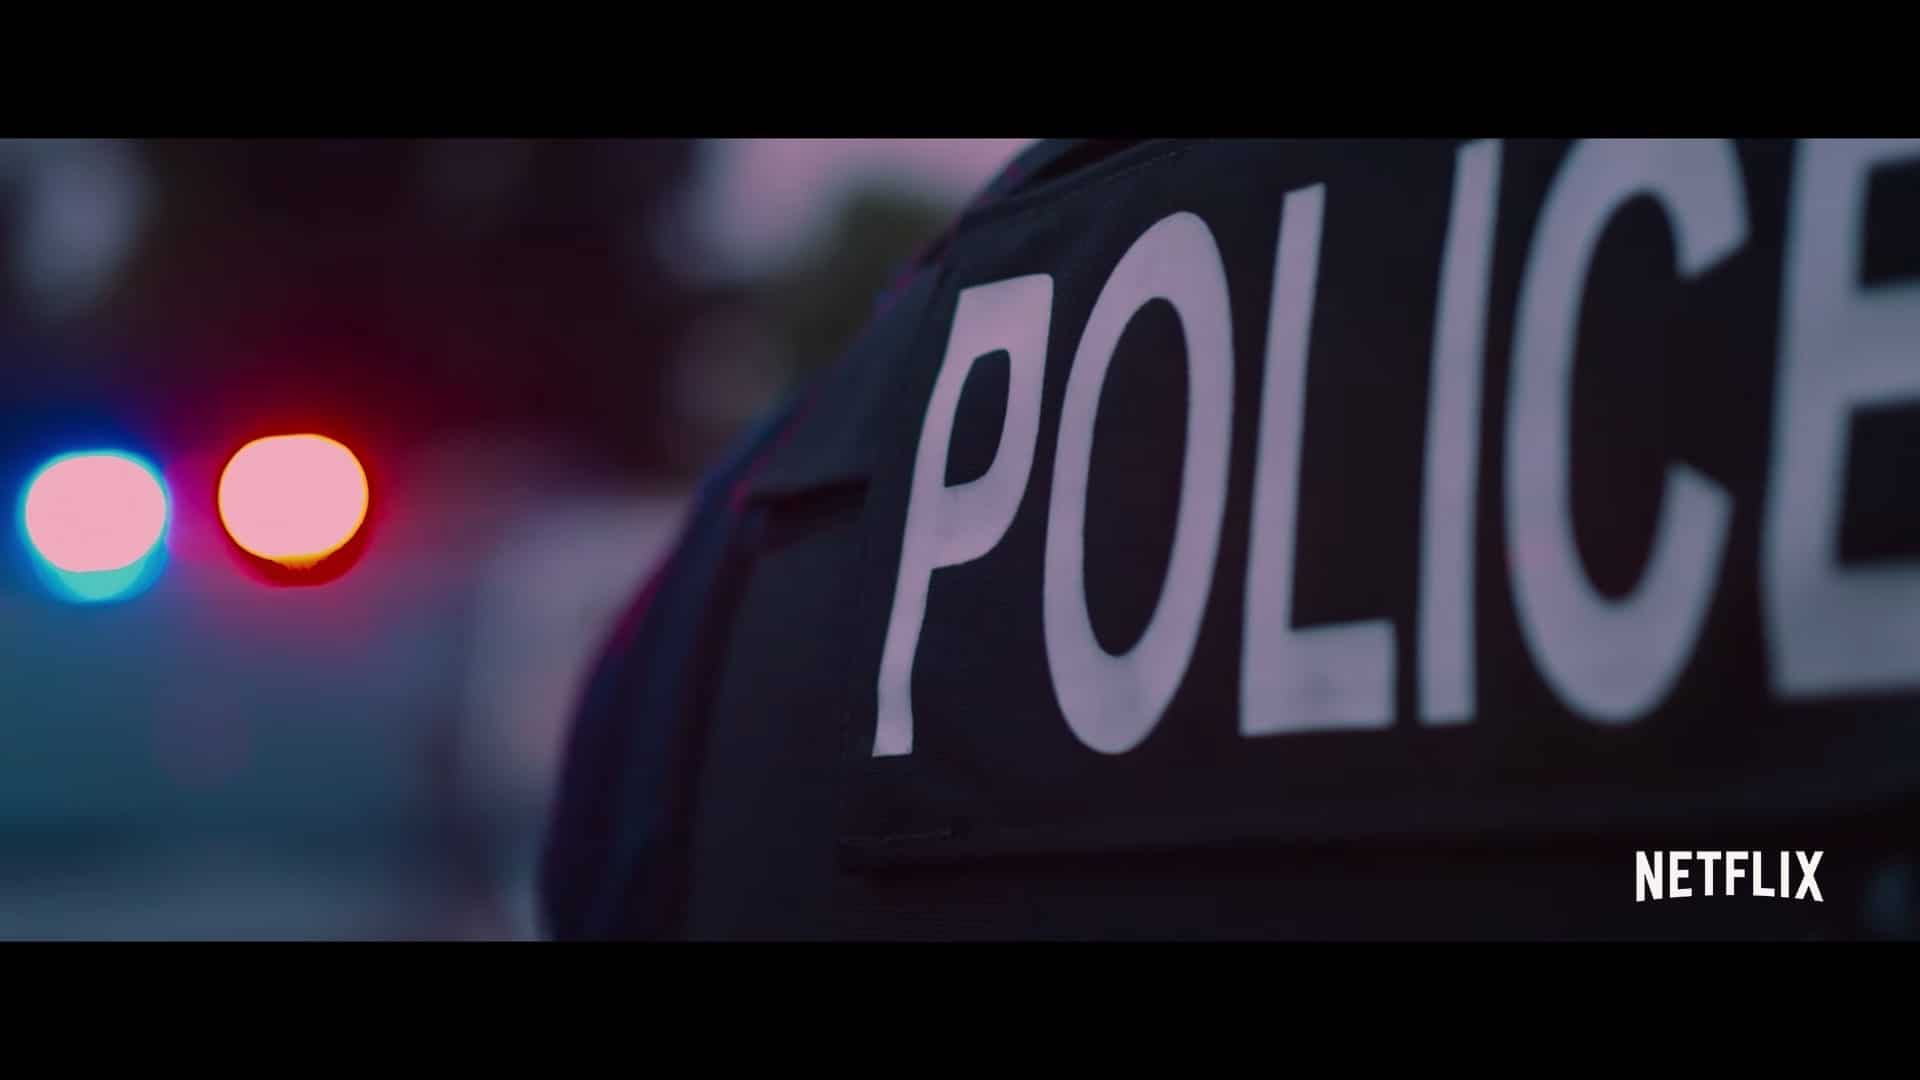 Netflix Crime Scene The Vanishing at the Cecil Hotel Trailer, Netflix Crime Documentary Series, Netflix Crime Docs, Coming to Netflix in February 2021